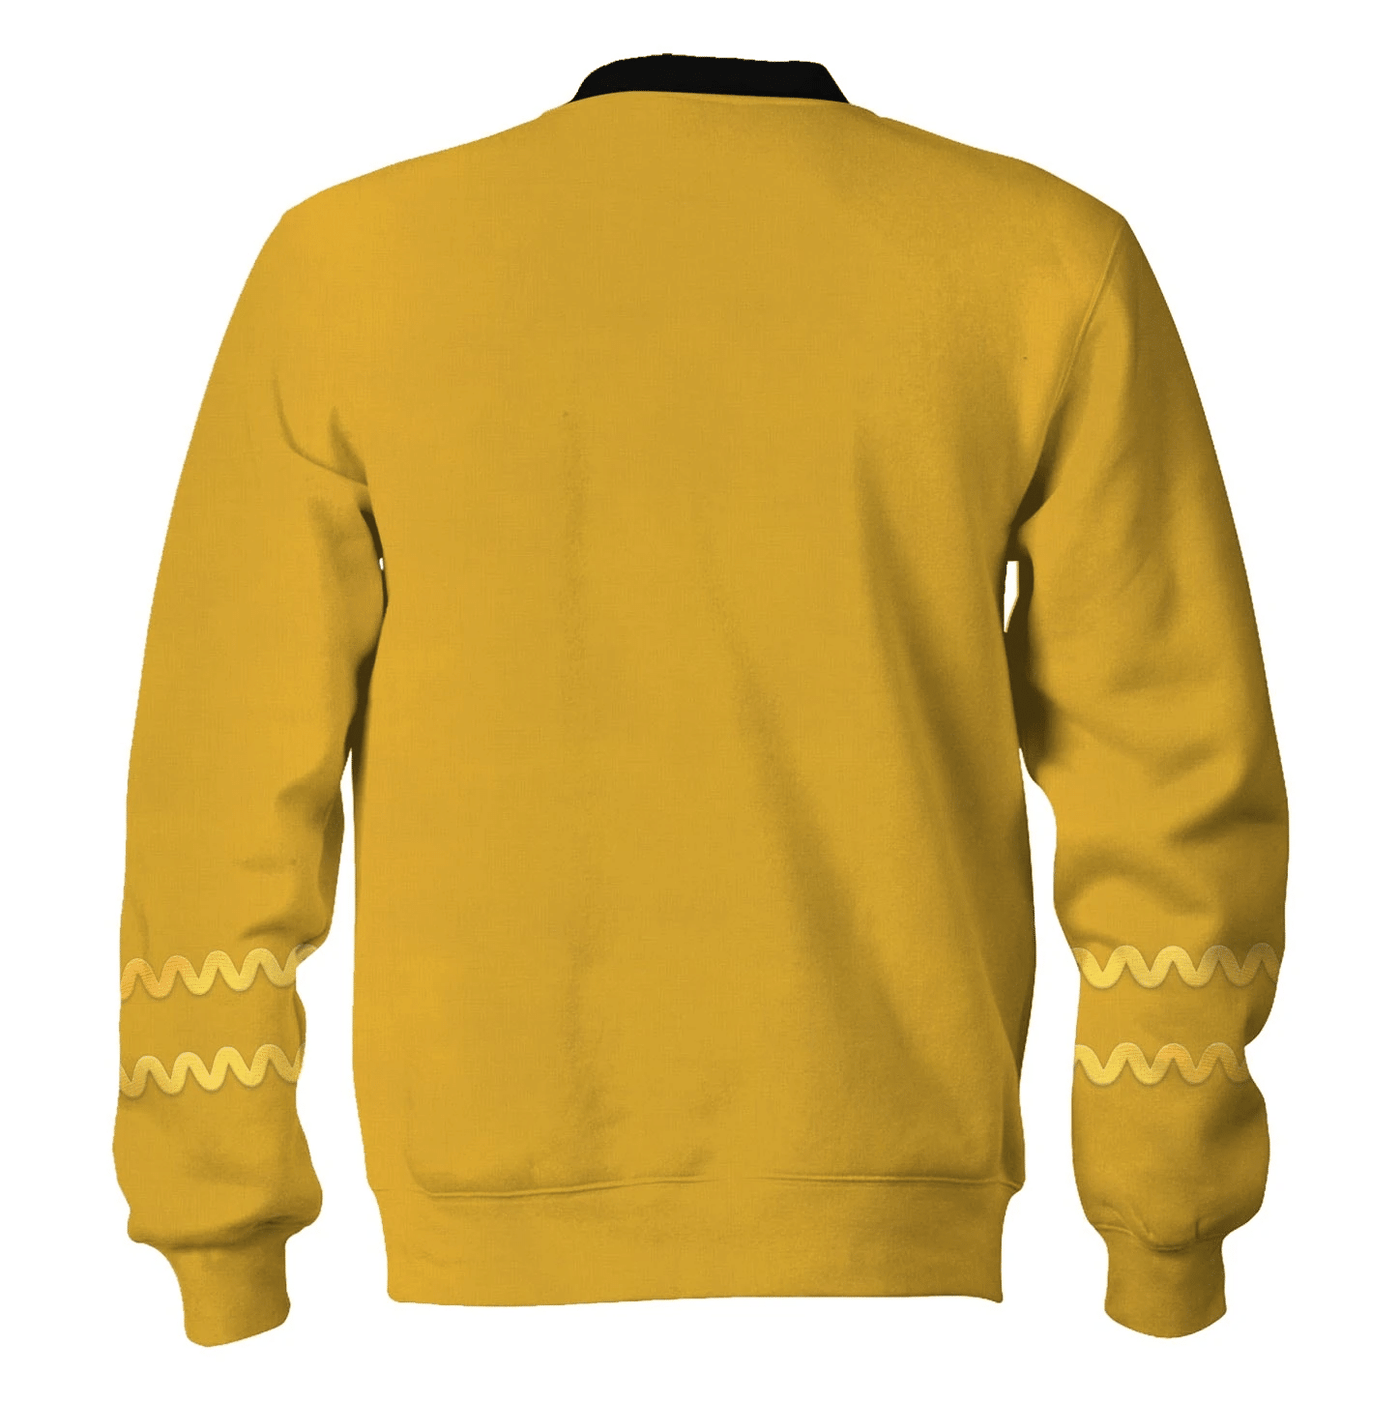 Star Trek The Original Series Yellow Cool - Sweater - Ugly Christmas Sweater